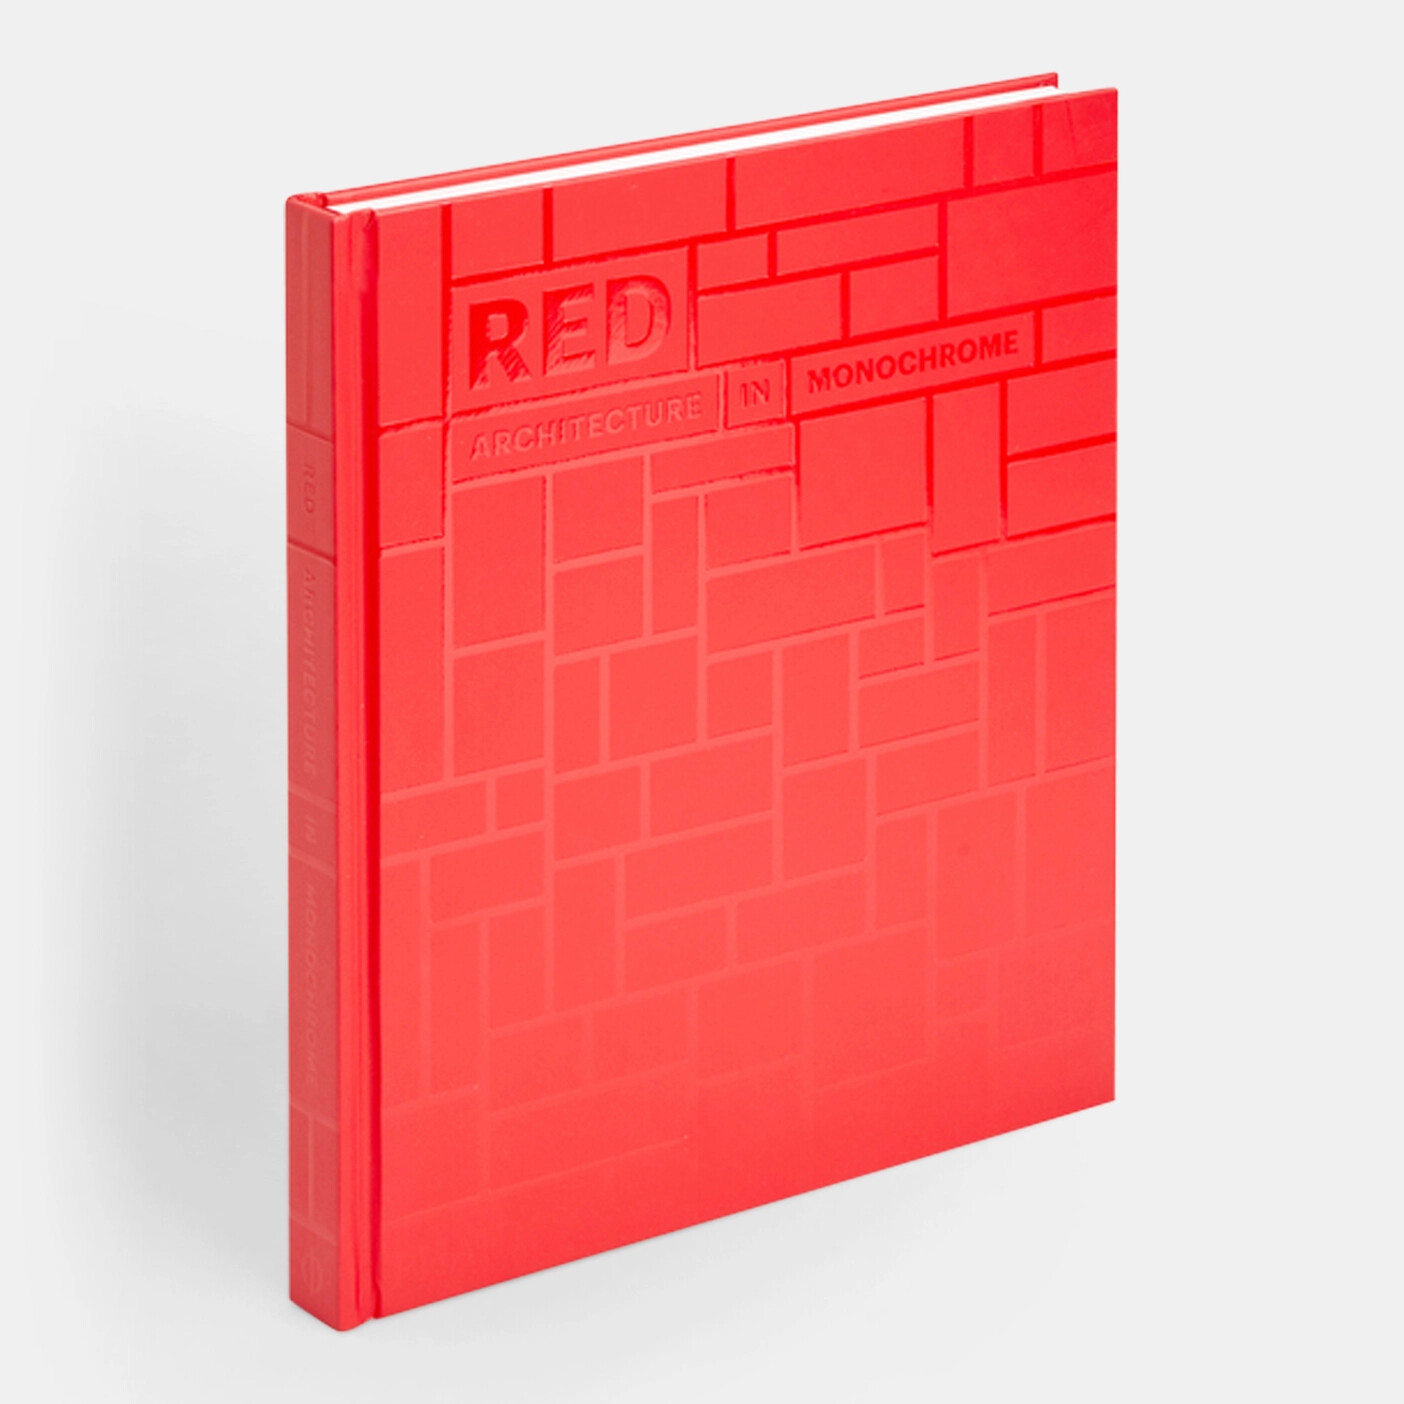 Phaidon - Red: Architecture in Monochrome:
Phaidon Editors